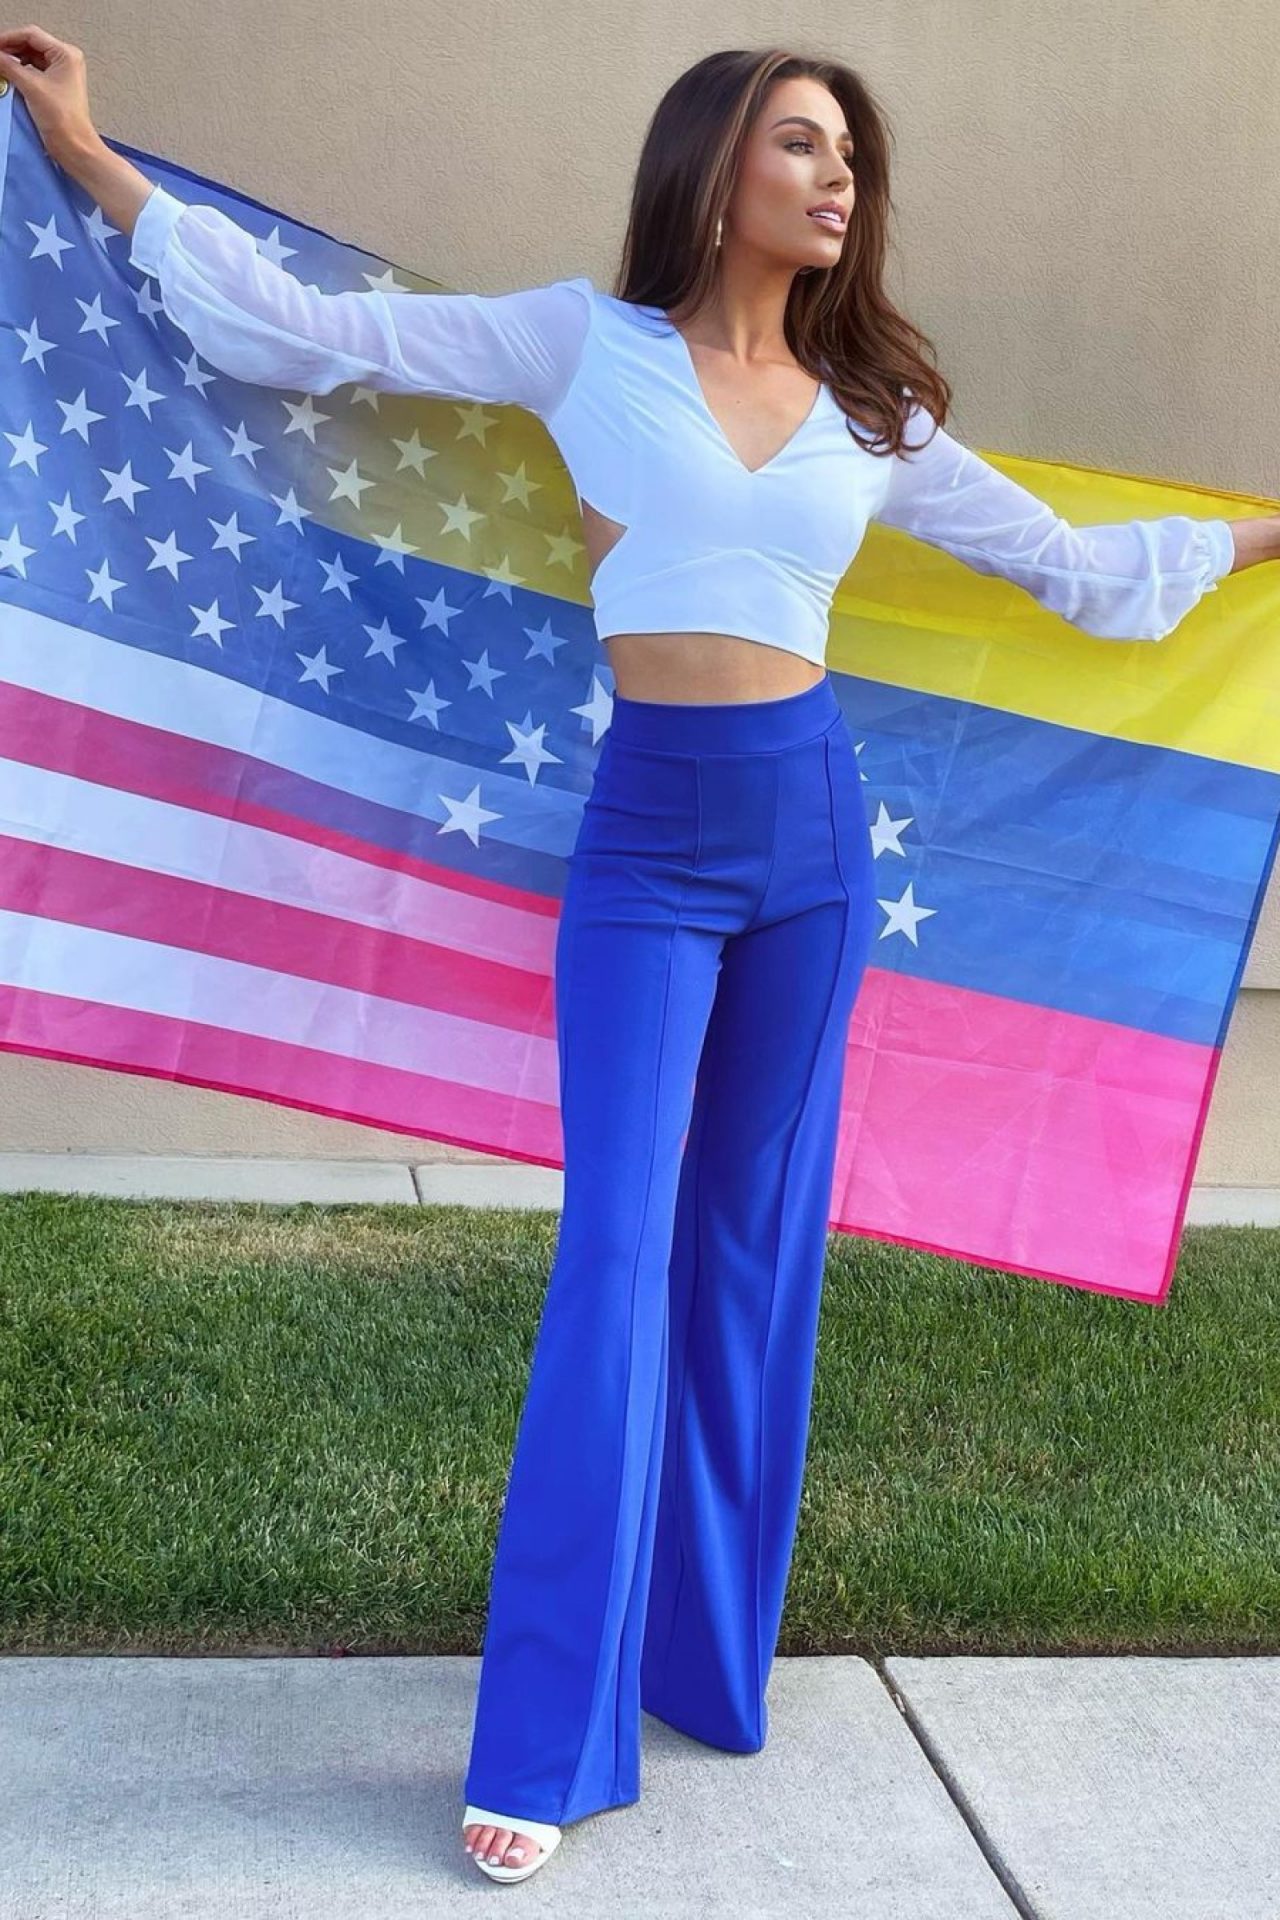 A latina representing Miss USA